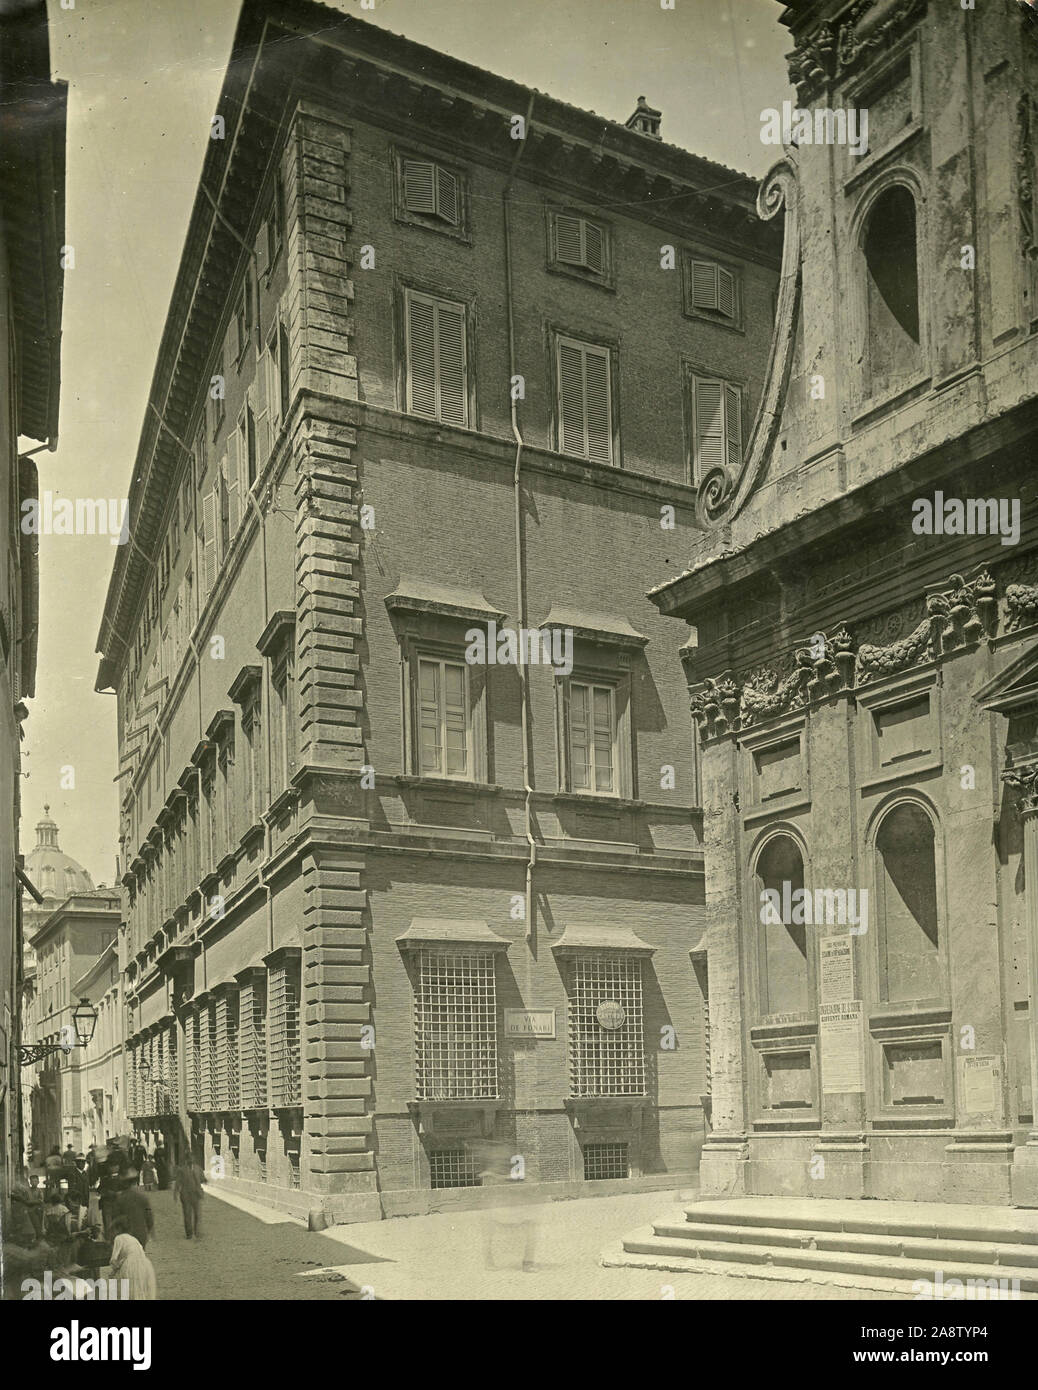 View of Via dei Funari, Rome, Italy 1930s Stock Photo